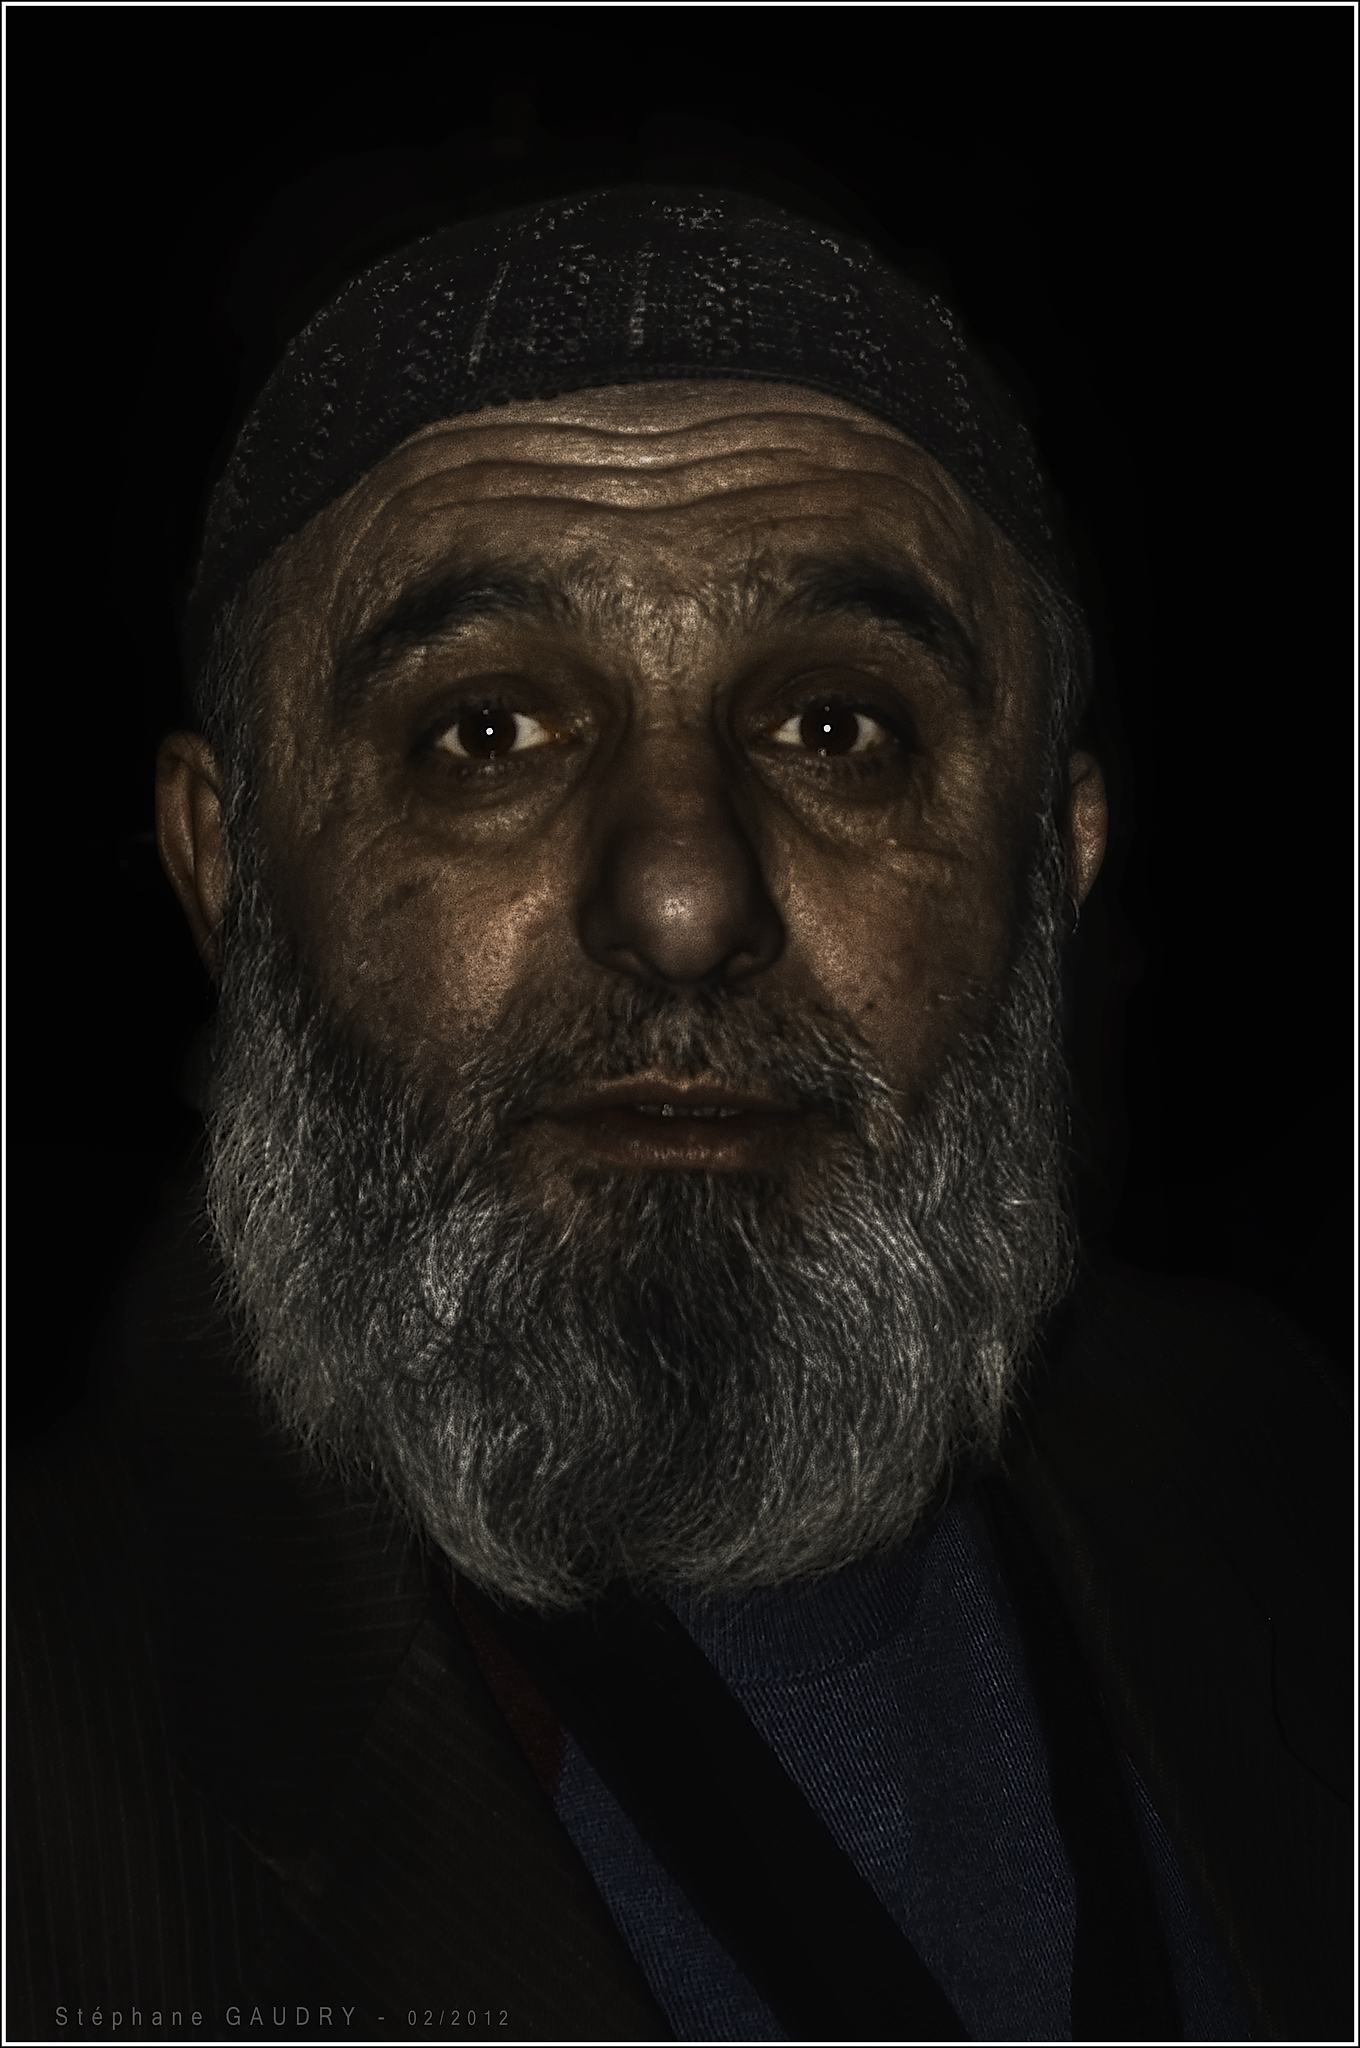 Istanbul, Portrait 201202-5 [Click to start slideshow]